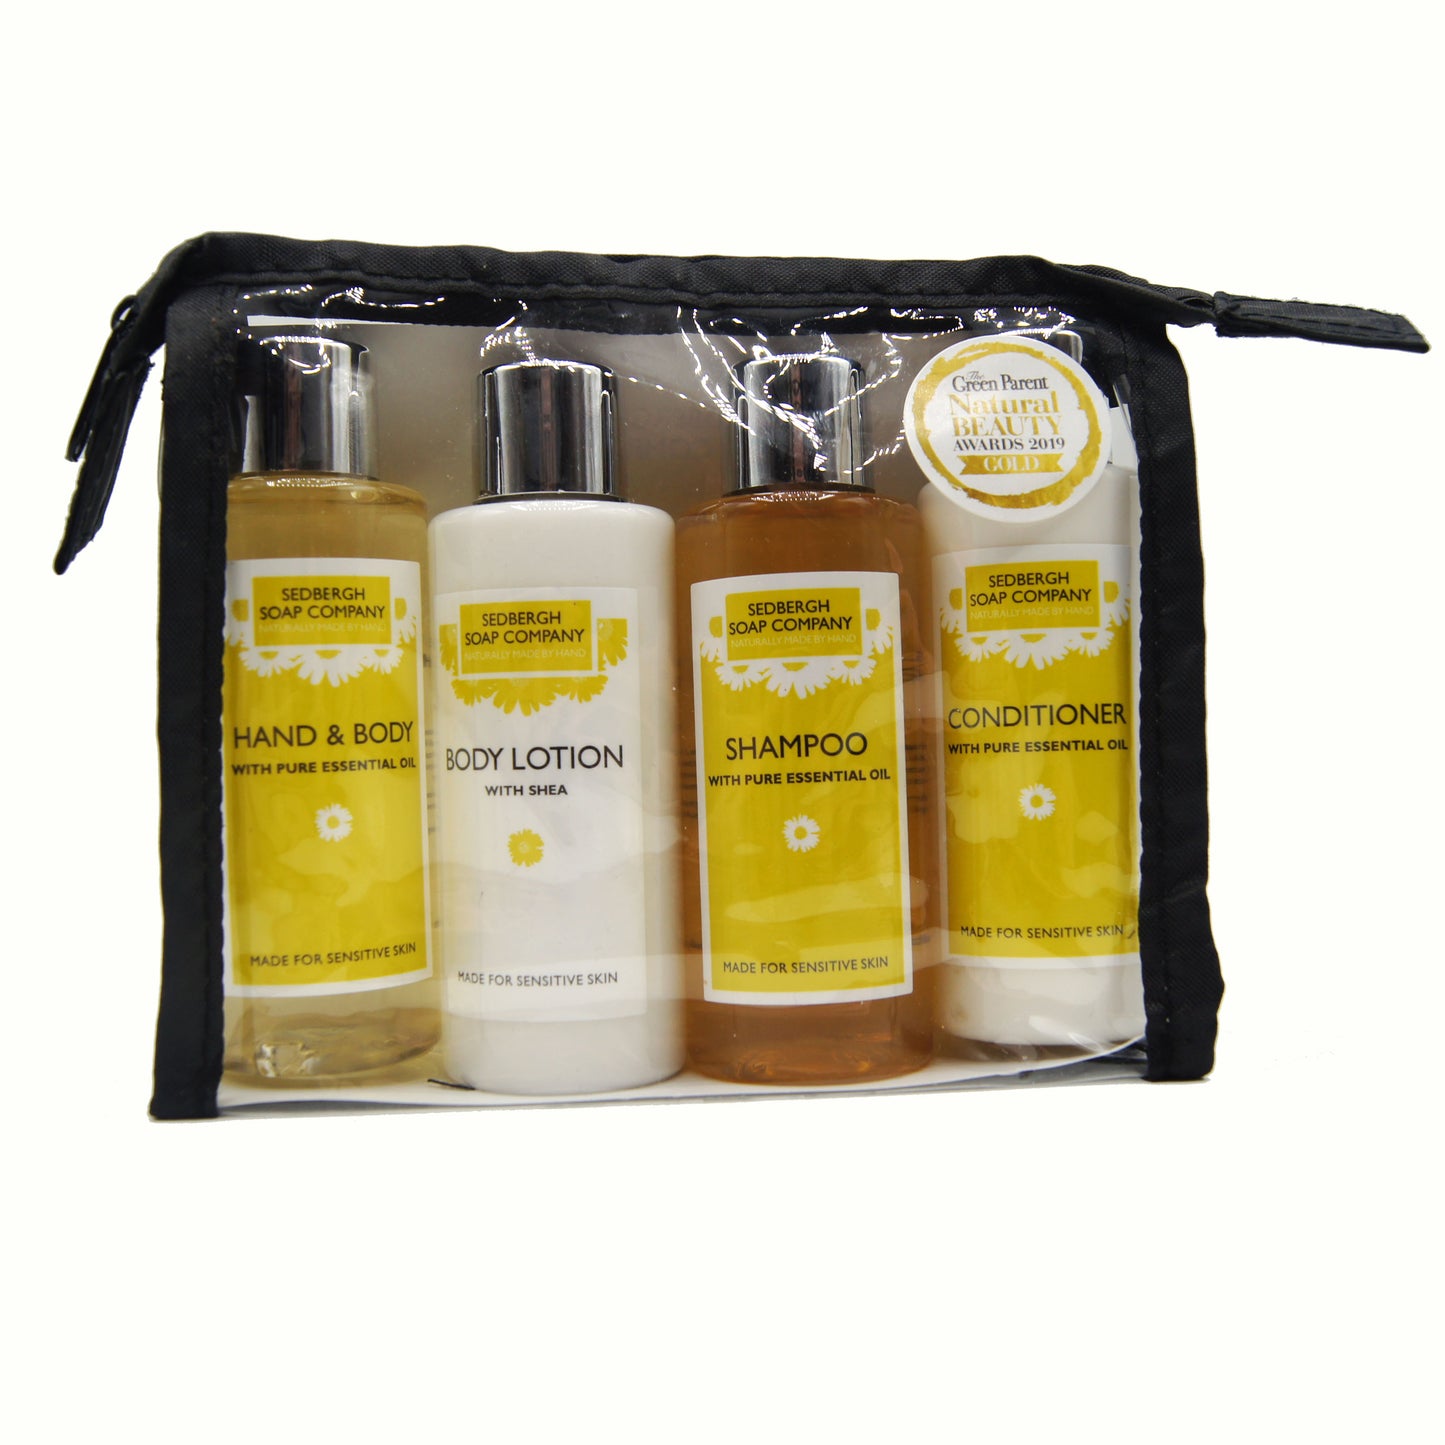 Sedbergh Soap Company Travel Set of Essentials